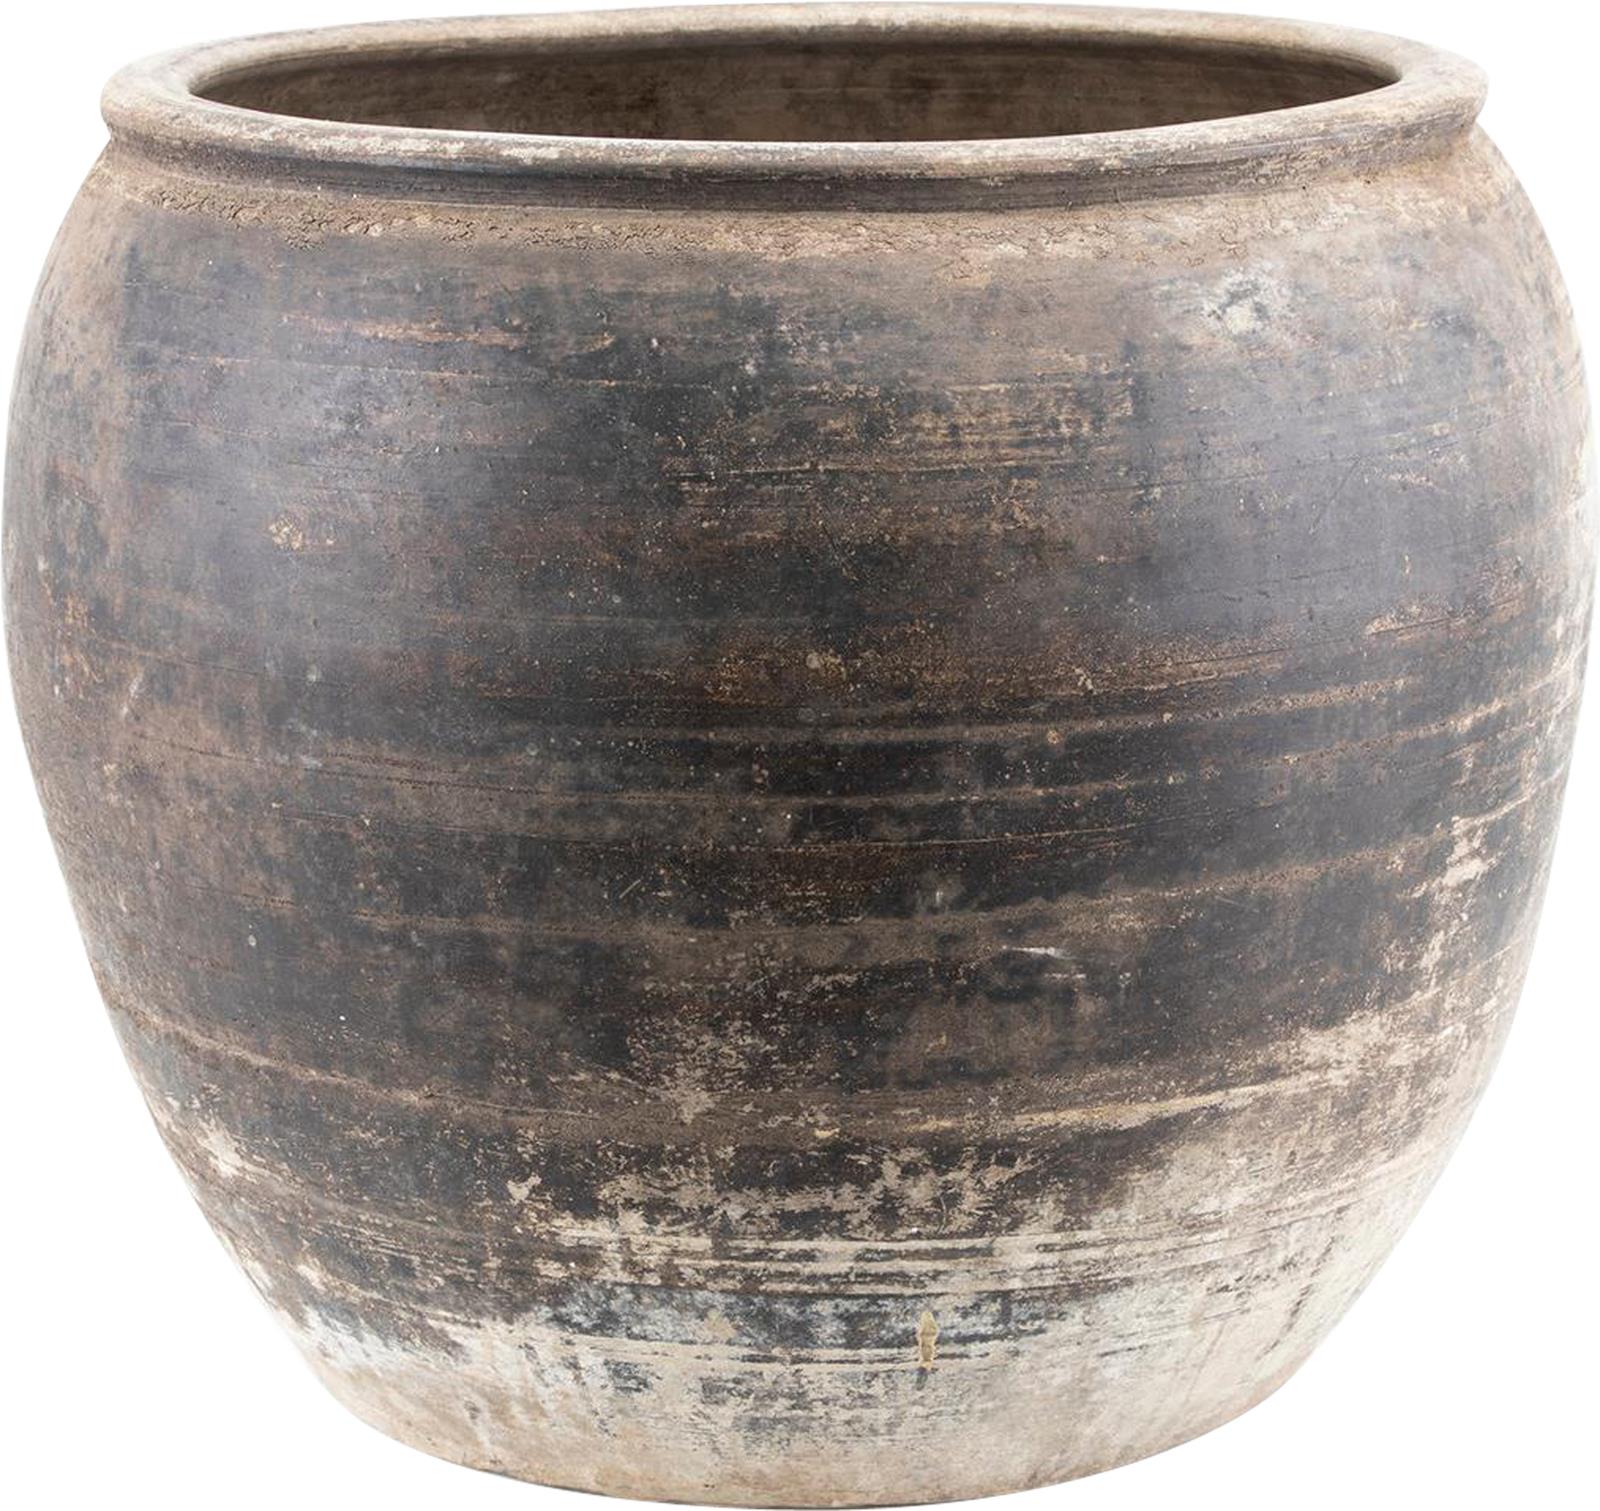 Water Jar Vase Vintage Large Gray Pottery Ceramic Handmade Hand-Cra-Image 6